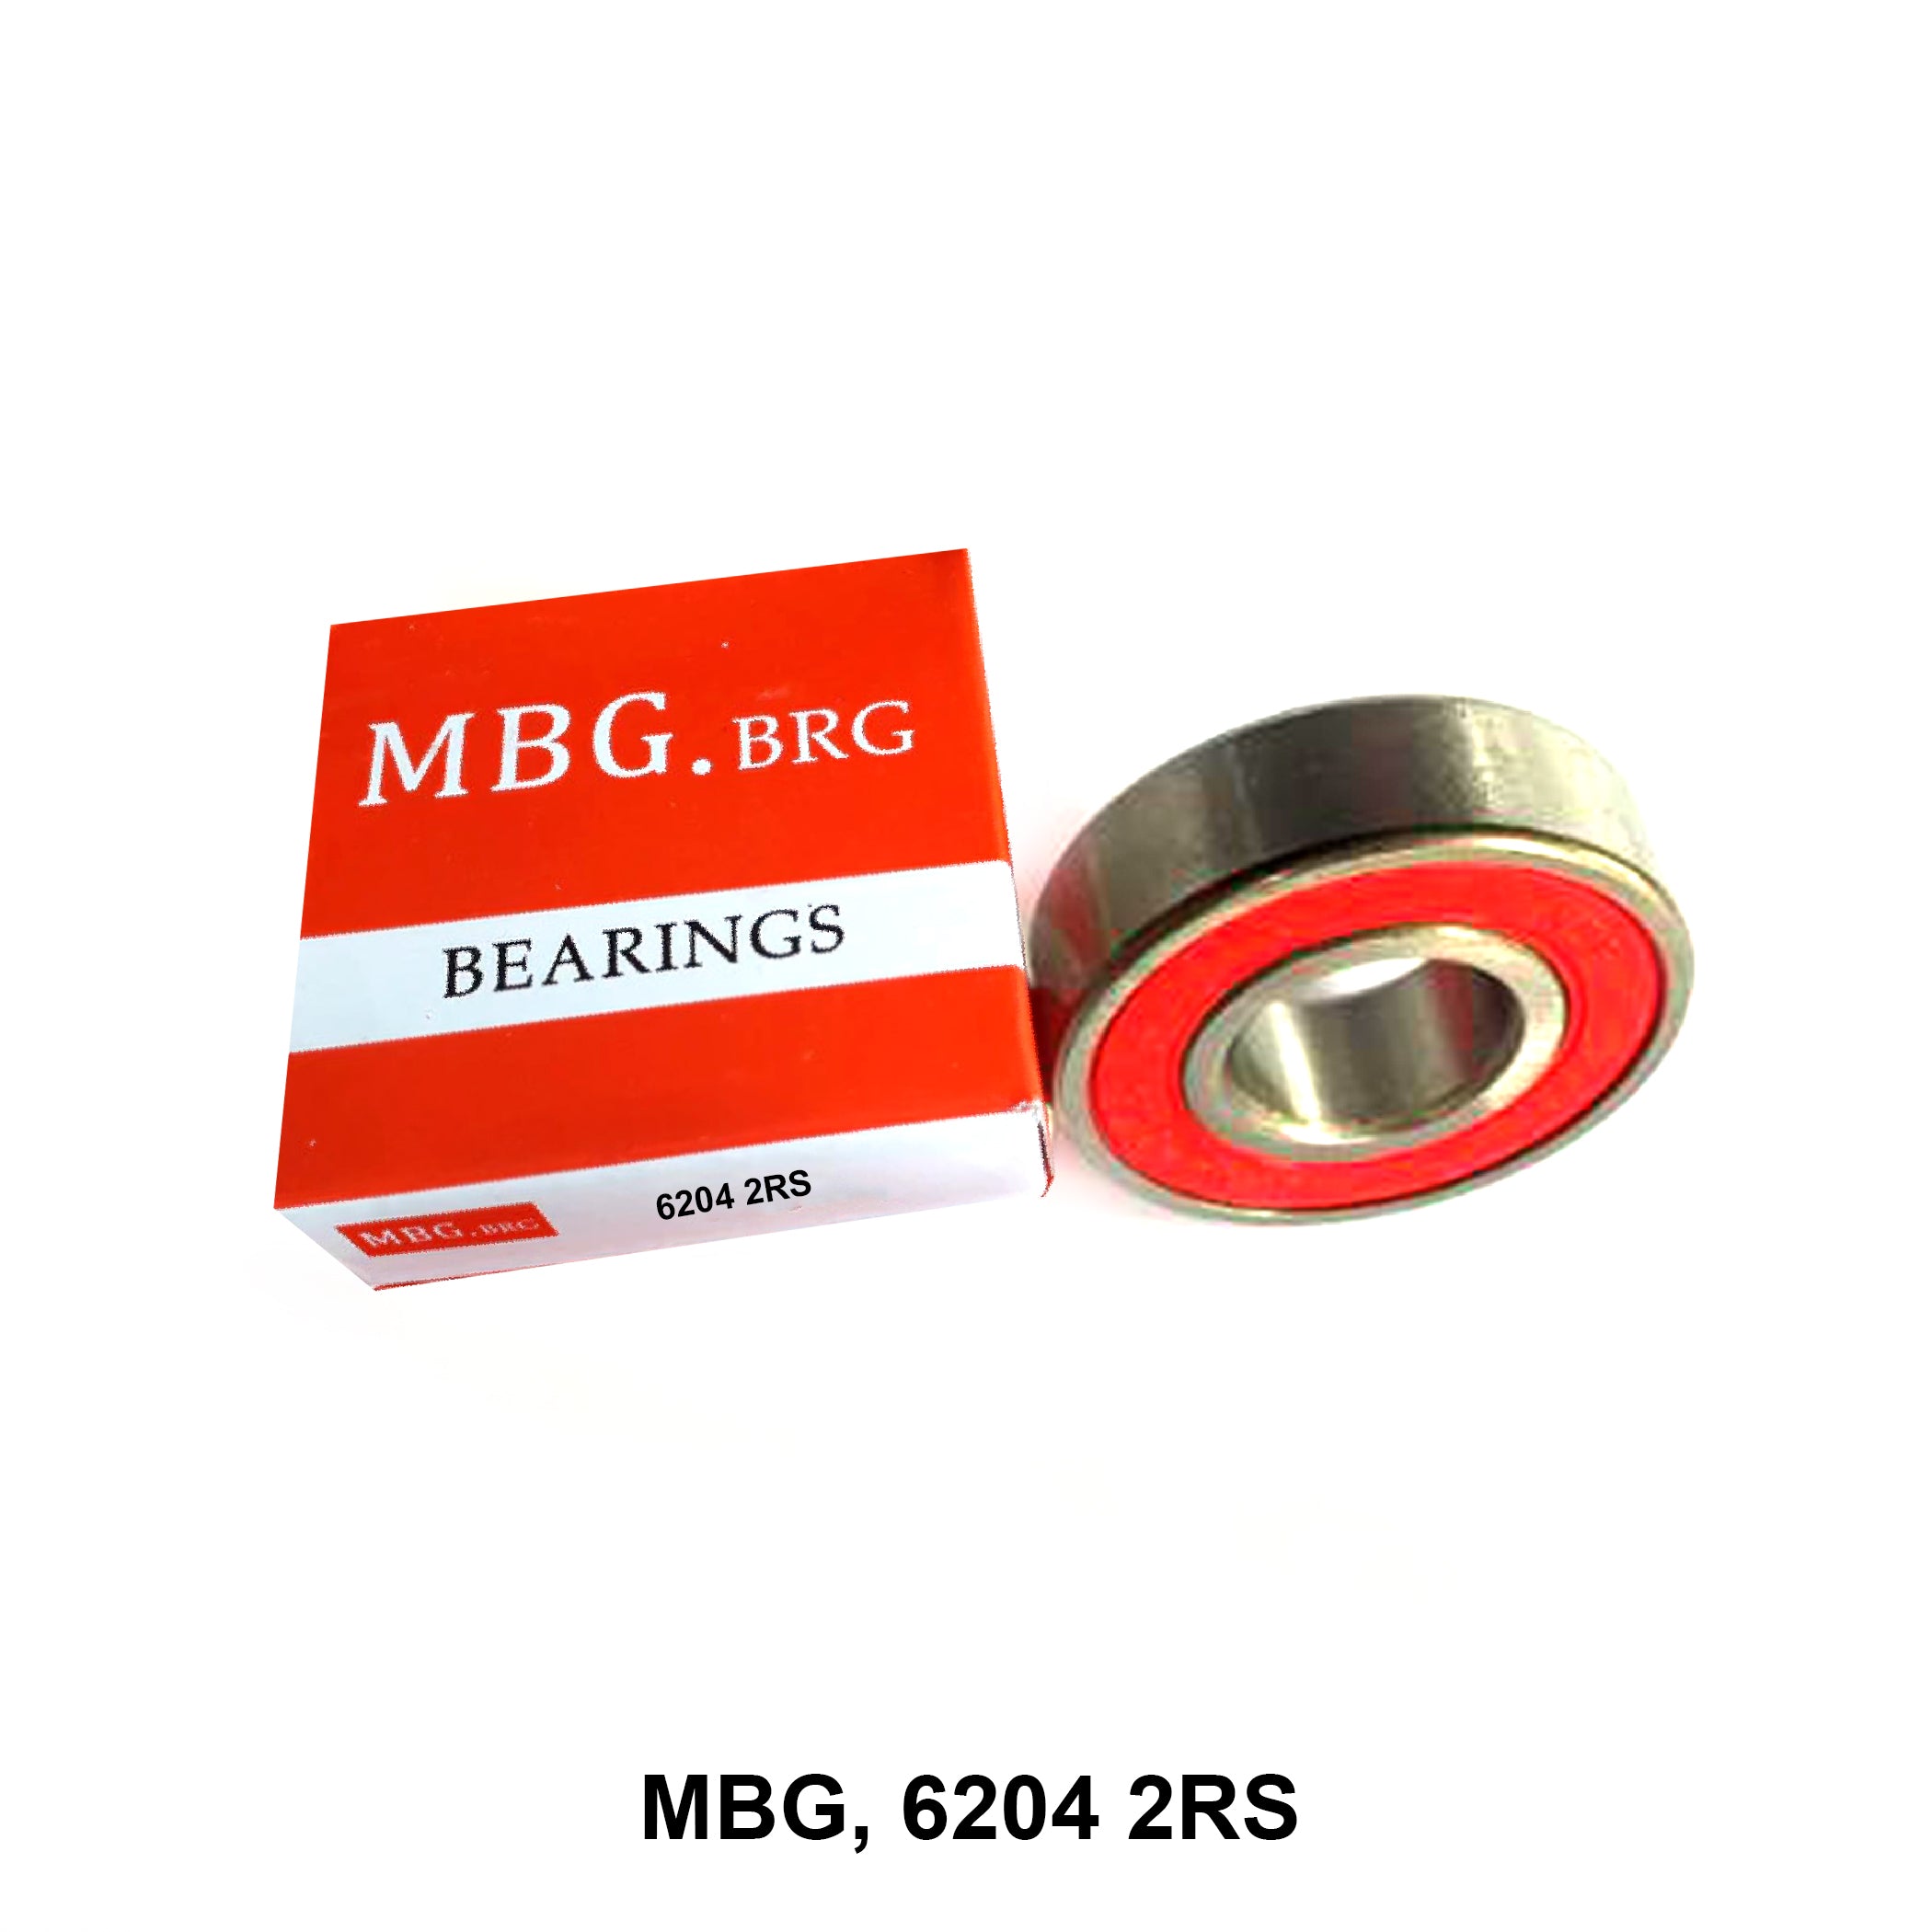 Deep Groove Ball Bearing, MBG, 6204 2RS (110746)